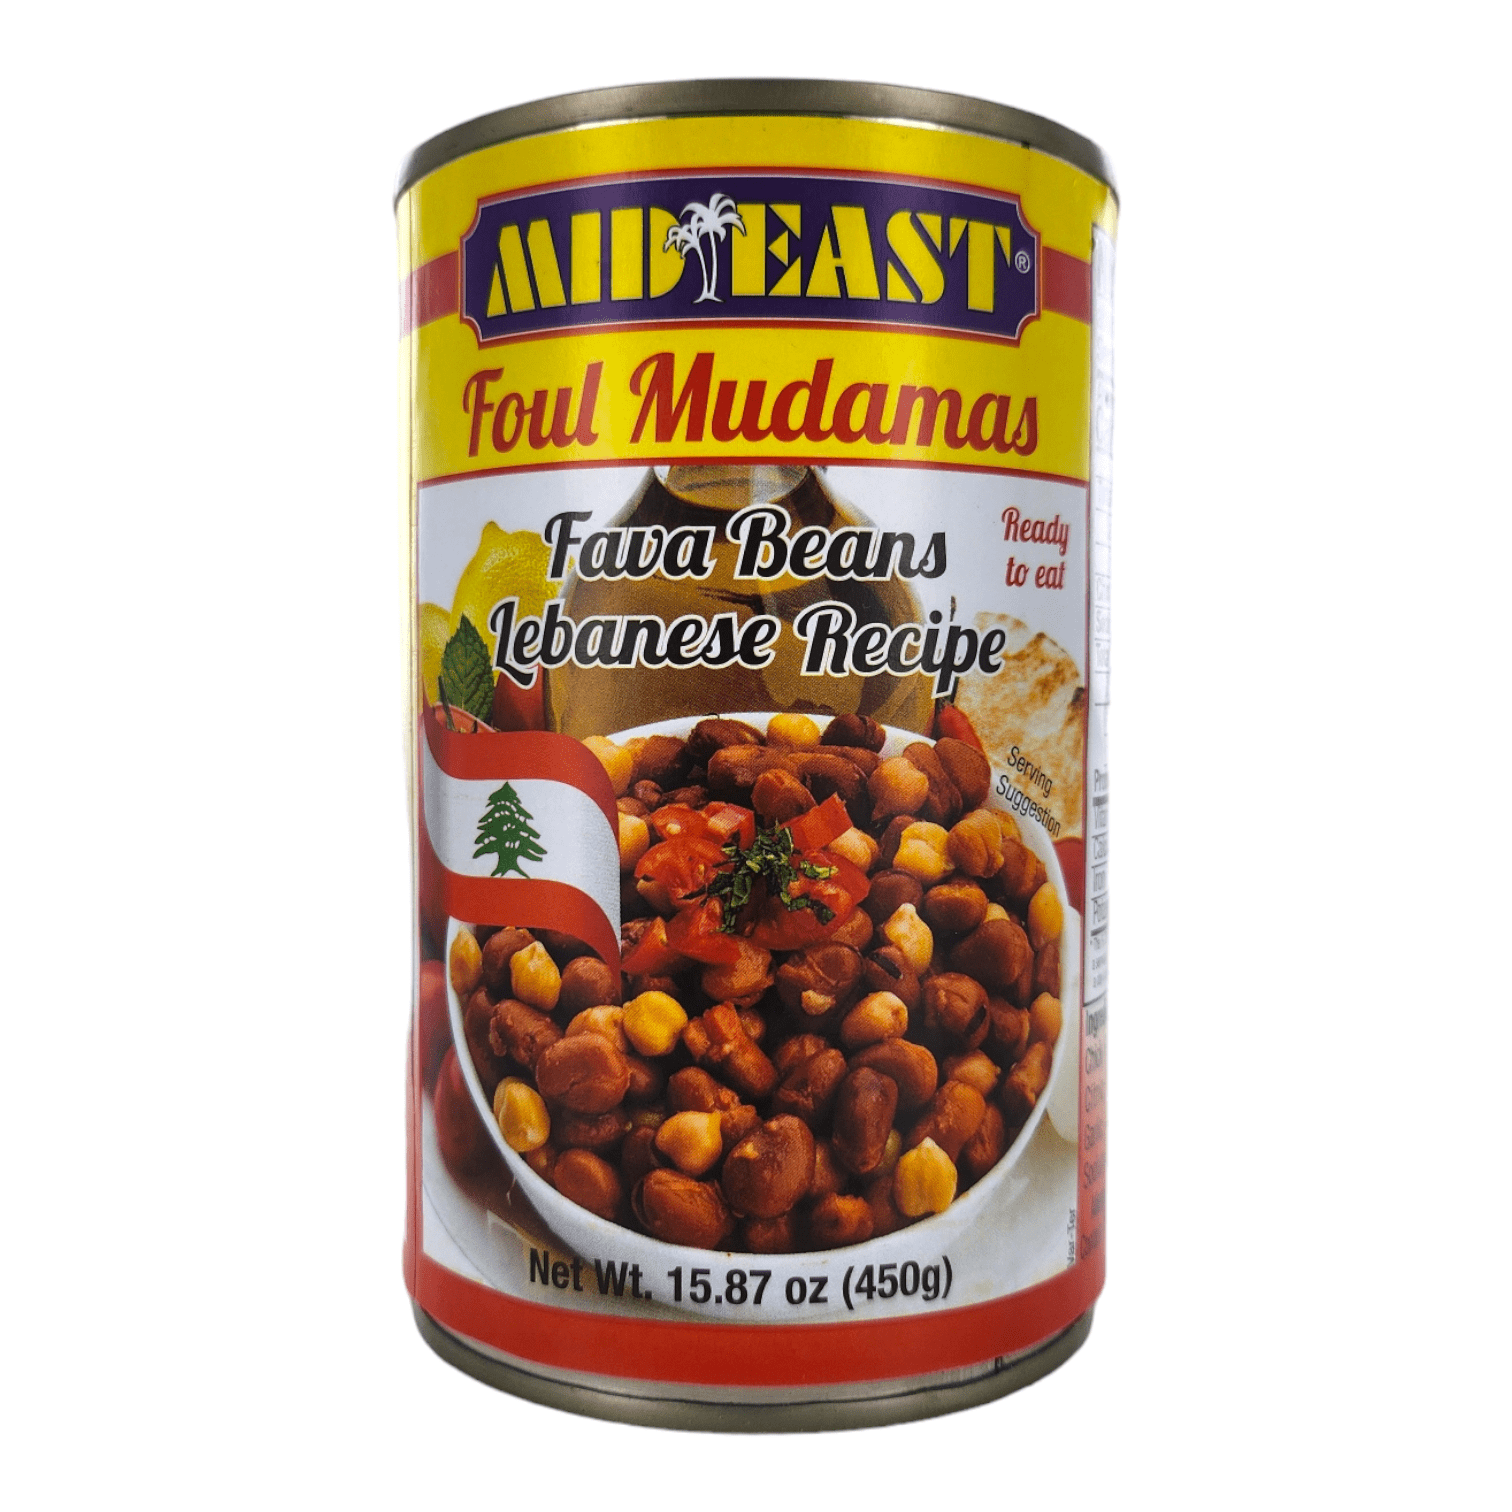 【6 Pack】 Mid East Fava Beans Lebanese Recipe (Foul Mudamas) 15.87 oz (450g) - Mideast Grocers